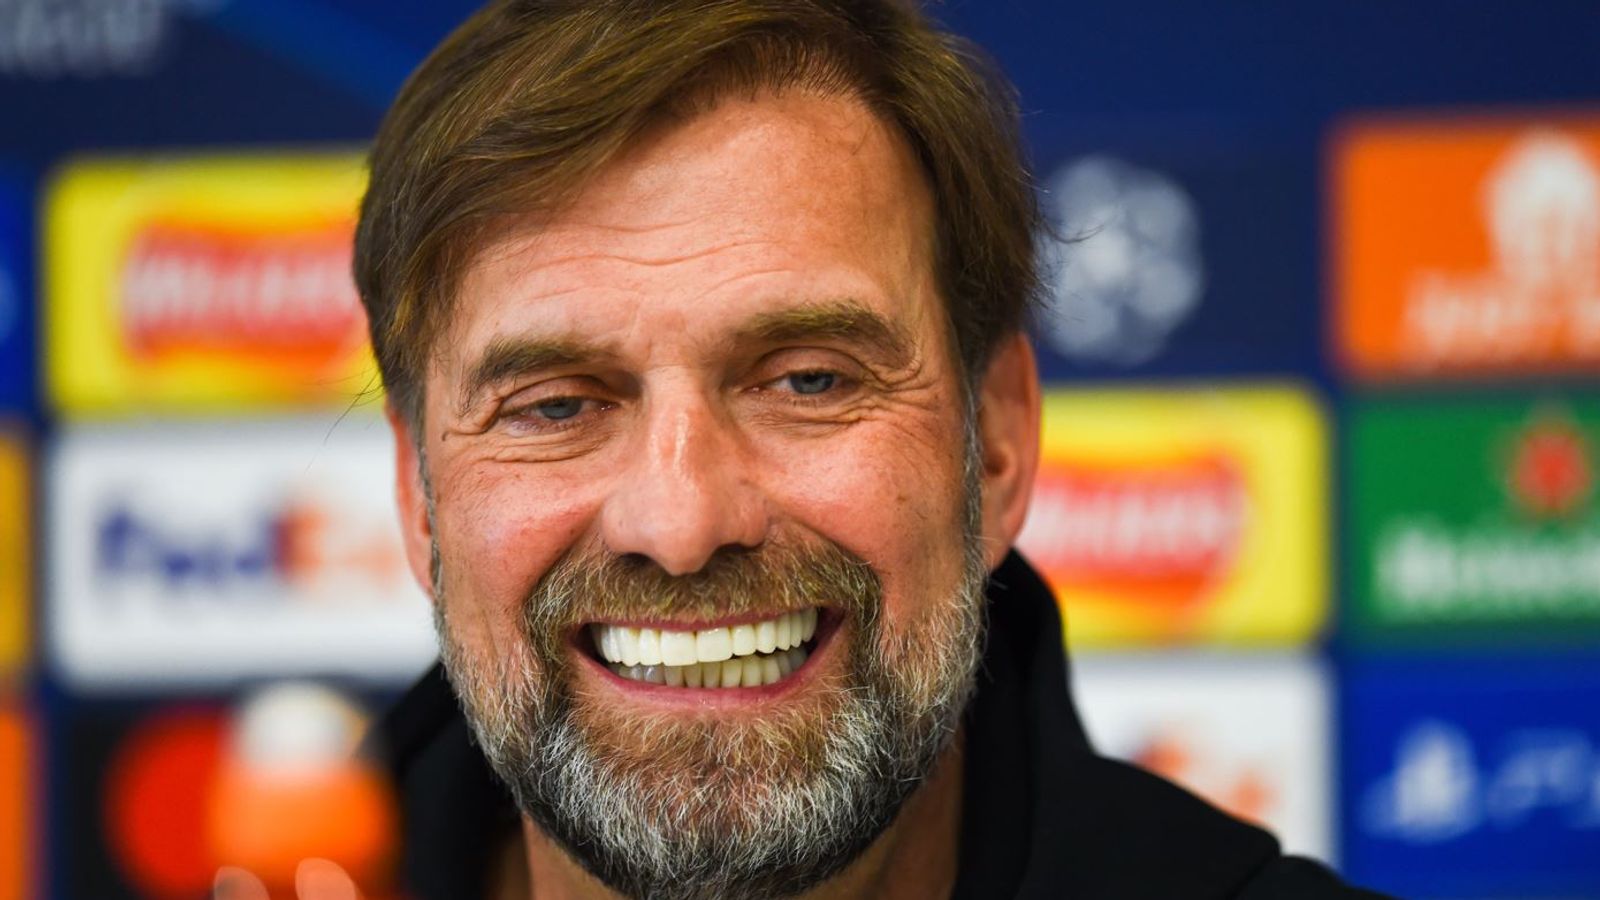 Jurgen Klopp: Liverpool supervisor optimistic for new time as he dismisses fears around Sadio Mane’s departure | Football News